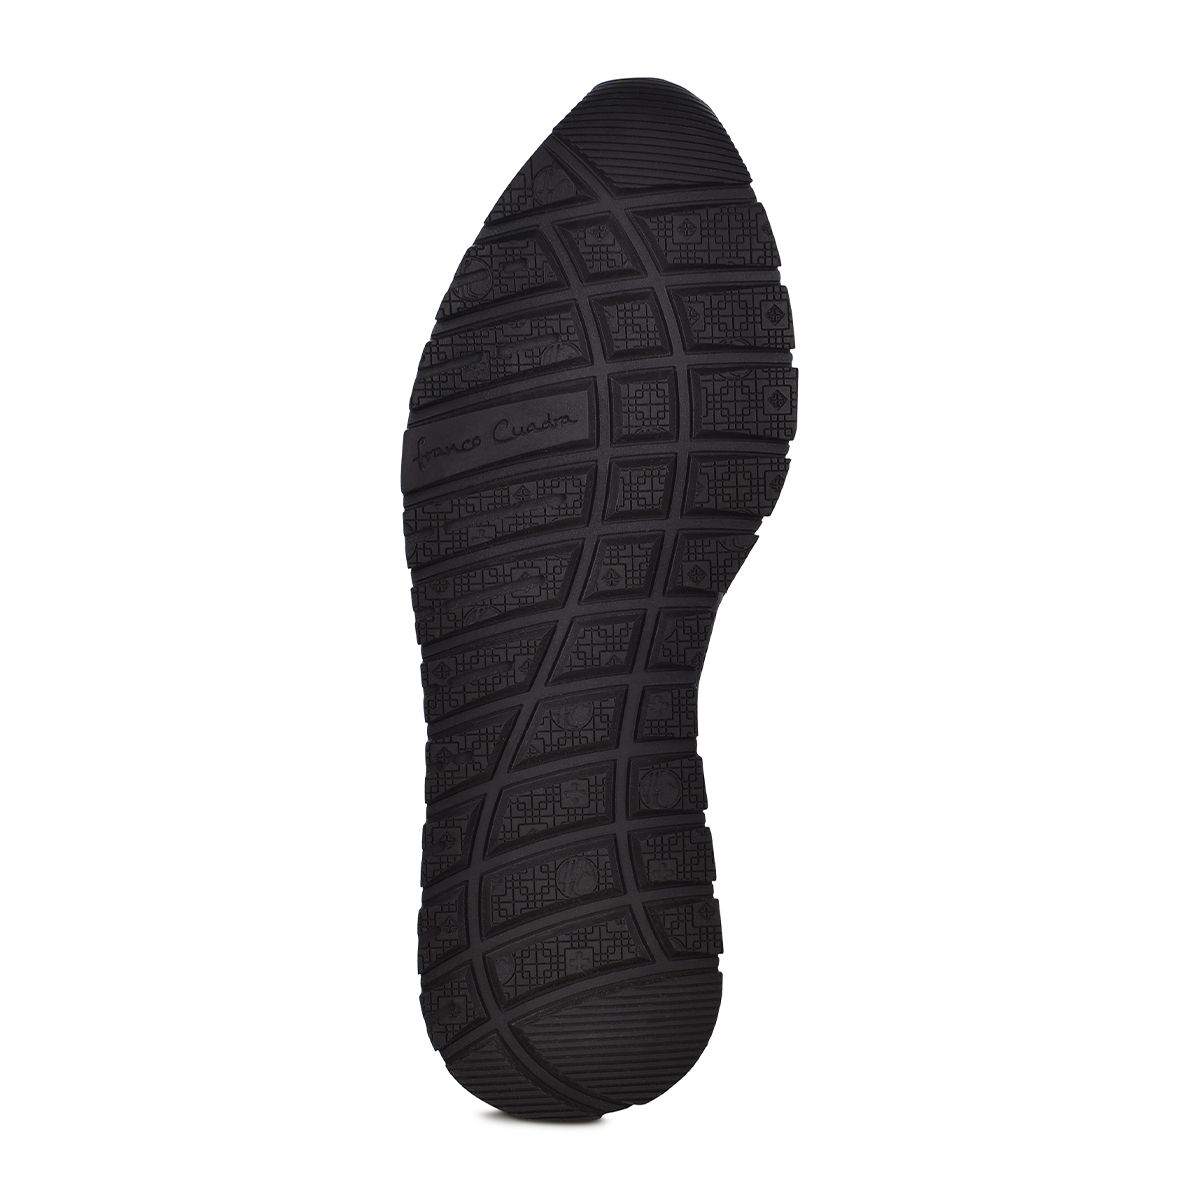 127CWTS - Cuadra chocolate casual fashion caiman derby sneakers for men-FRANCO CUADRA-Kuet-Cuadra-Boots